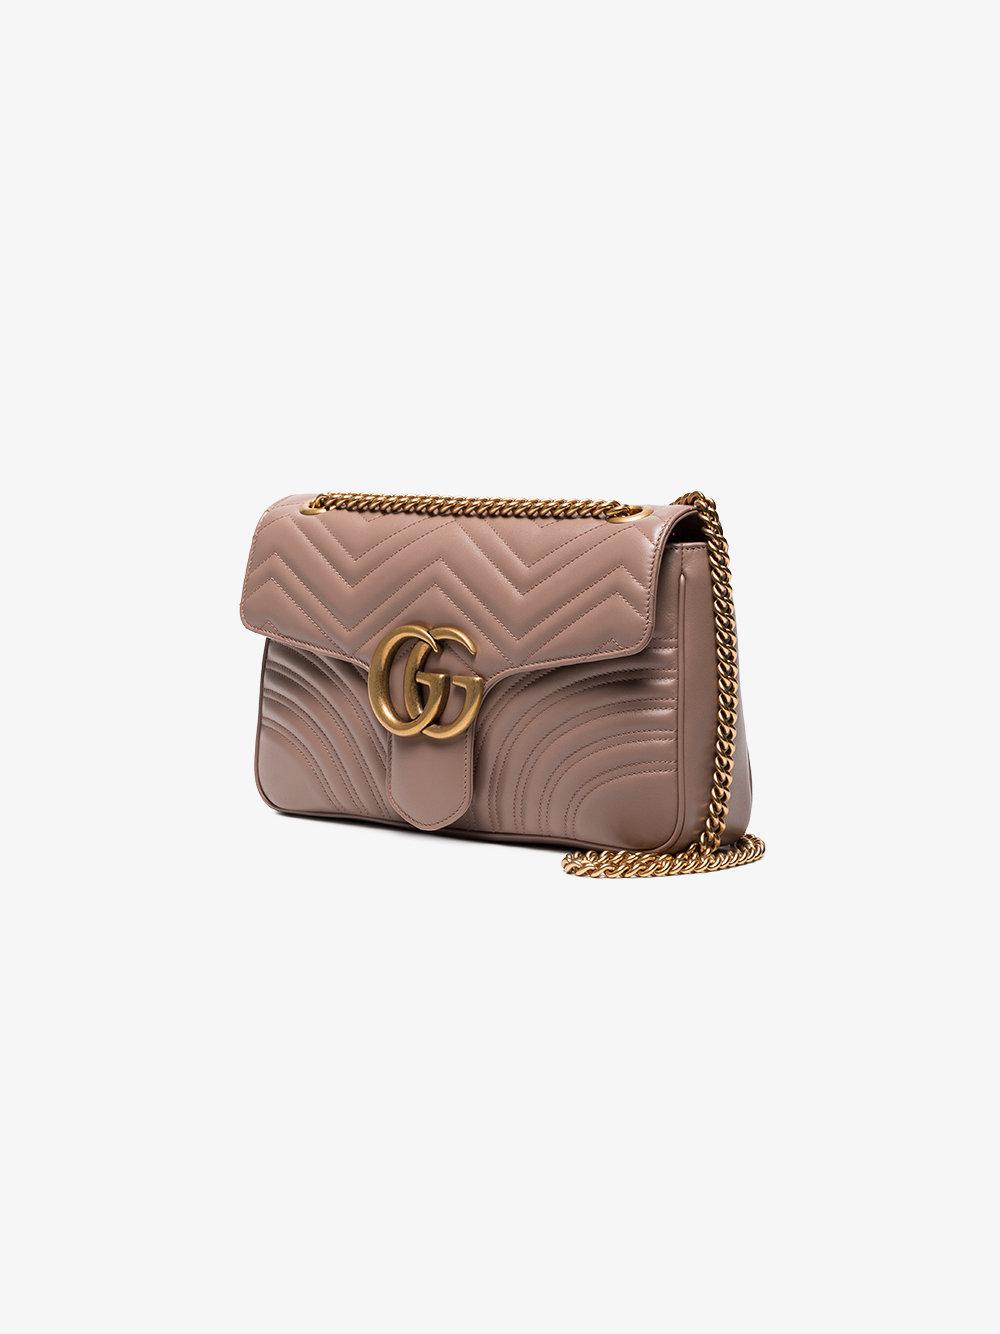 Gucci Beige Gg Marmont Medium Leather Shoulder Bag in Natural - Lyst